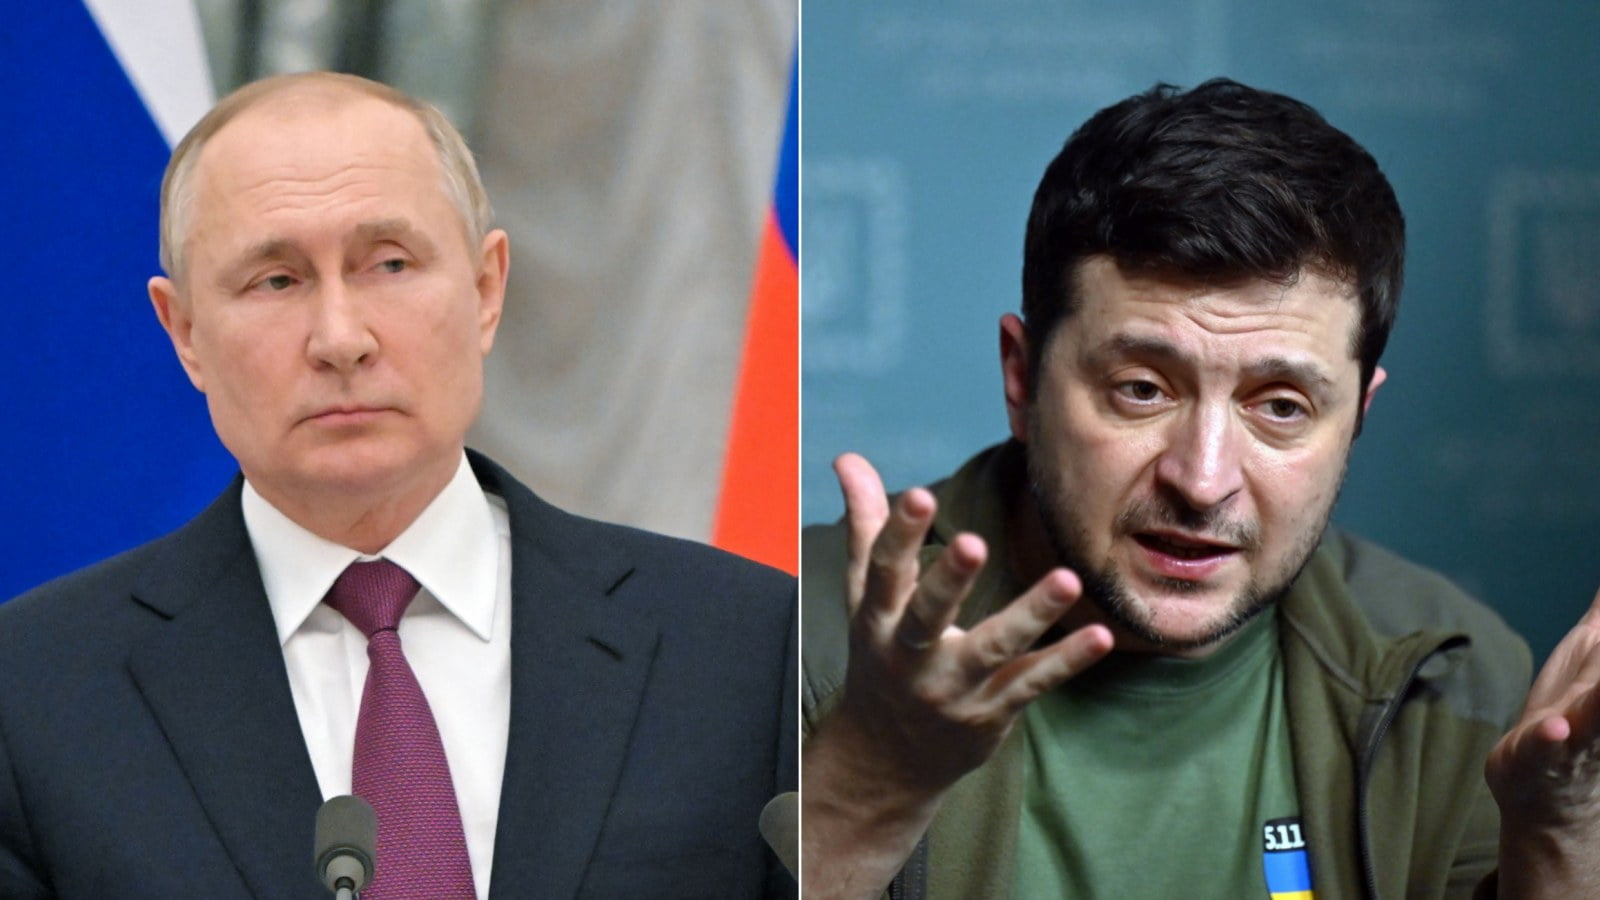 Putin ar renunța la debarcarea lui Zelenski